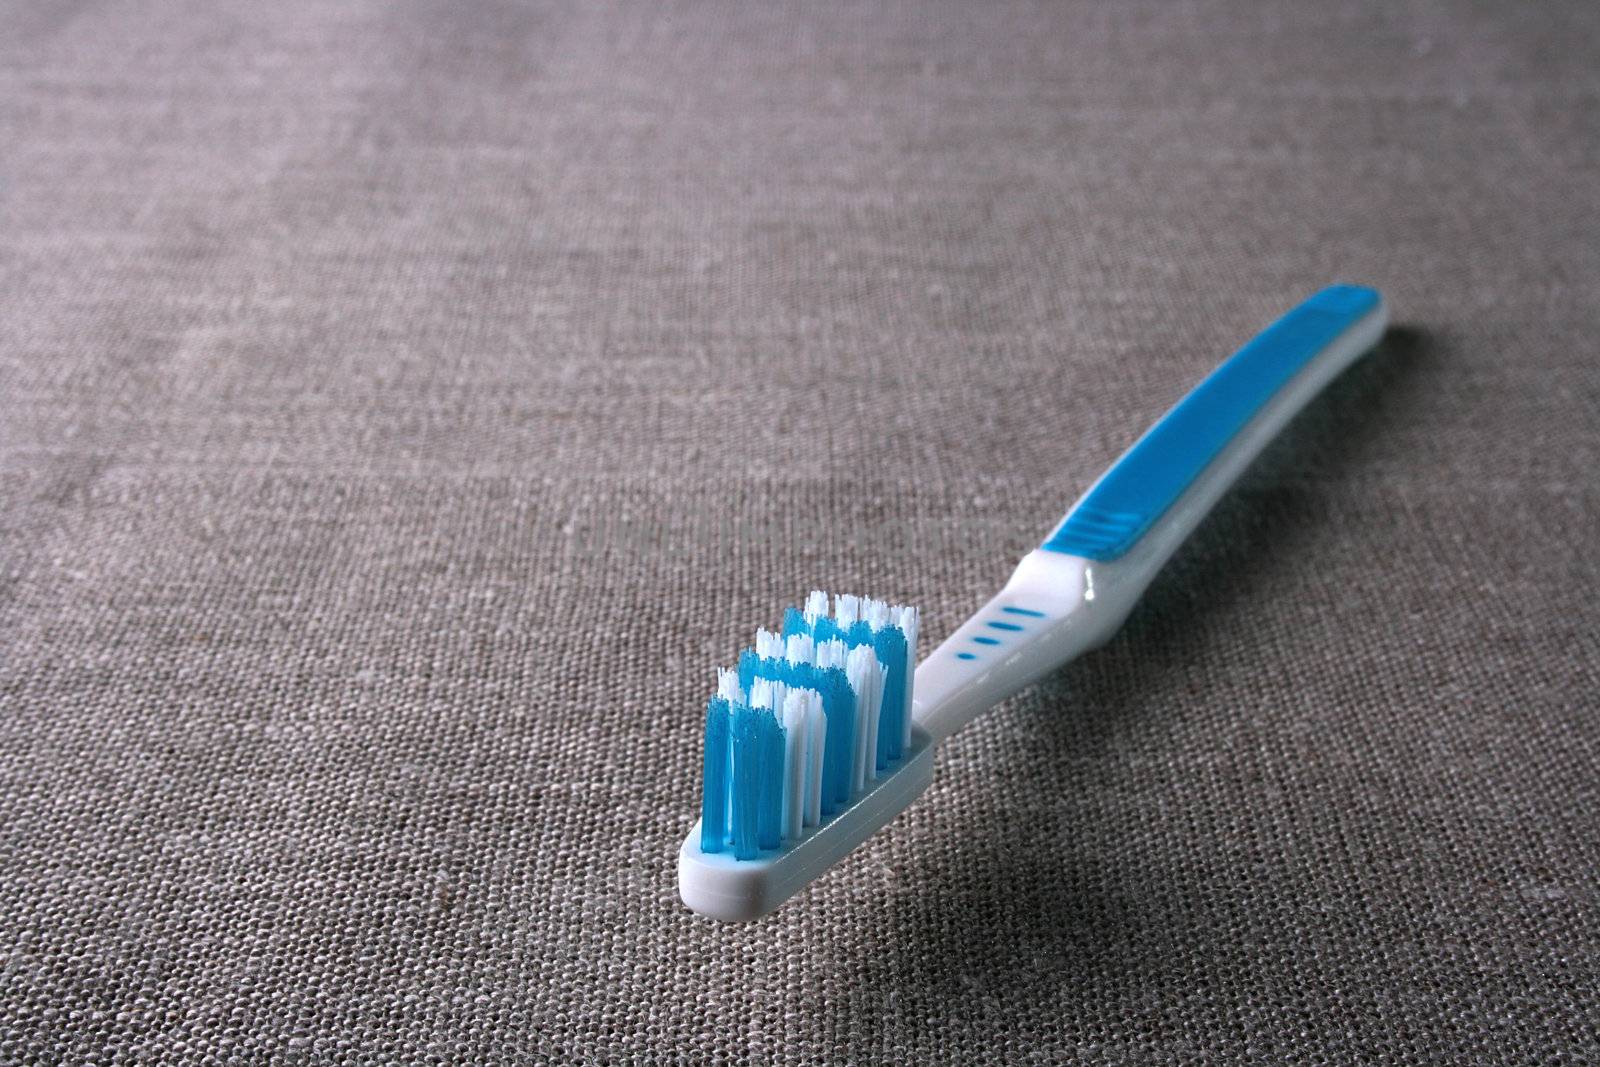 New dark blue tooth-brush on a grey rough fabric.